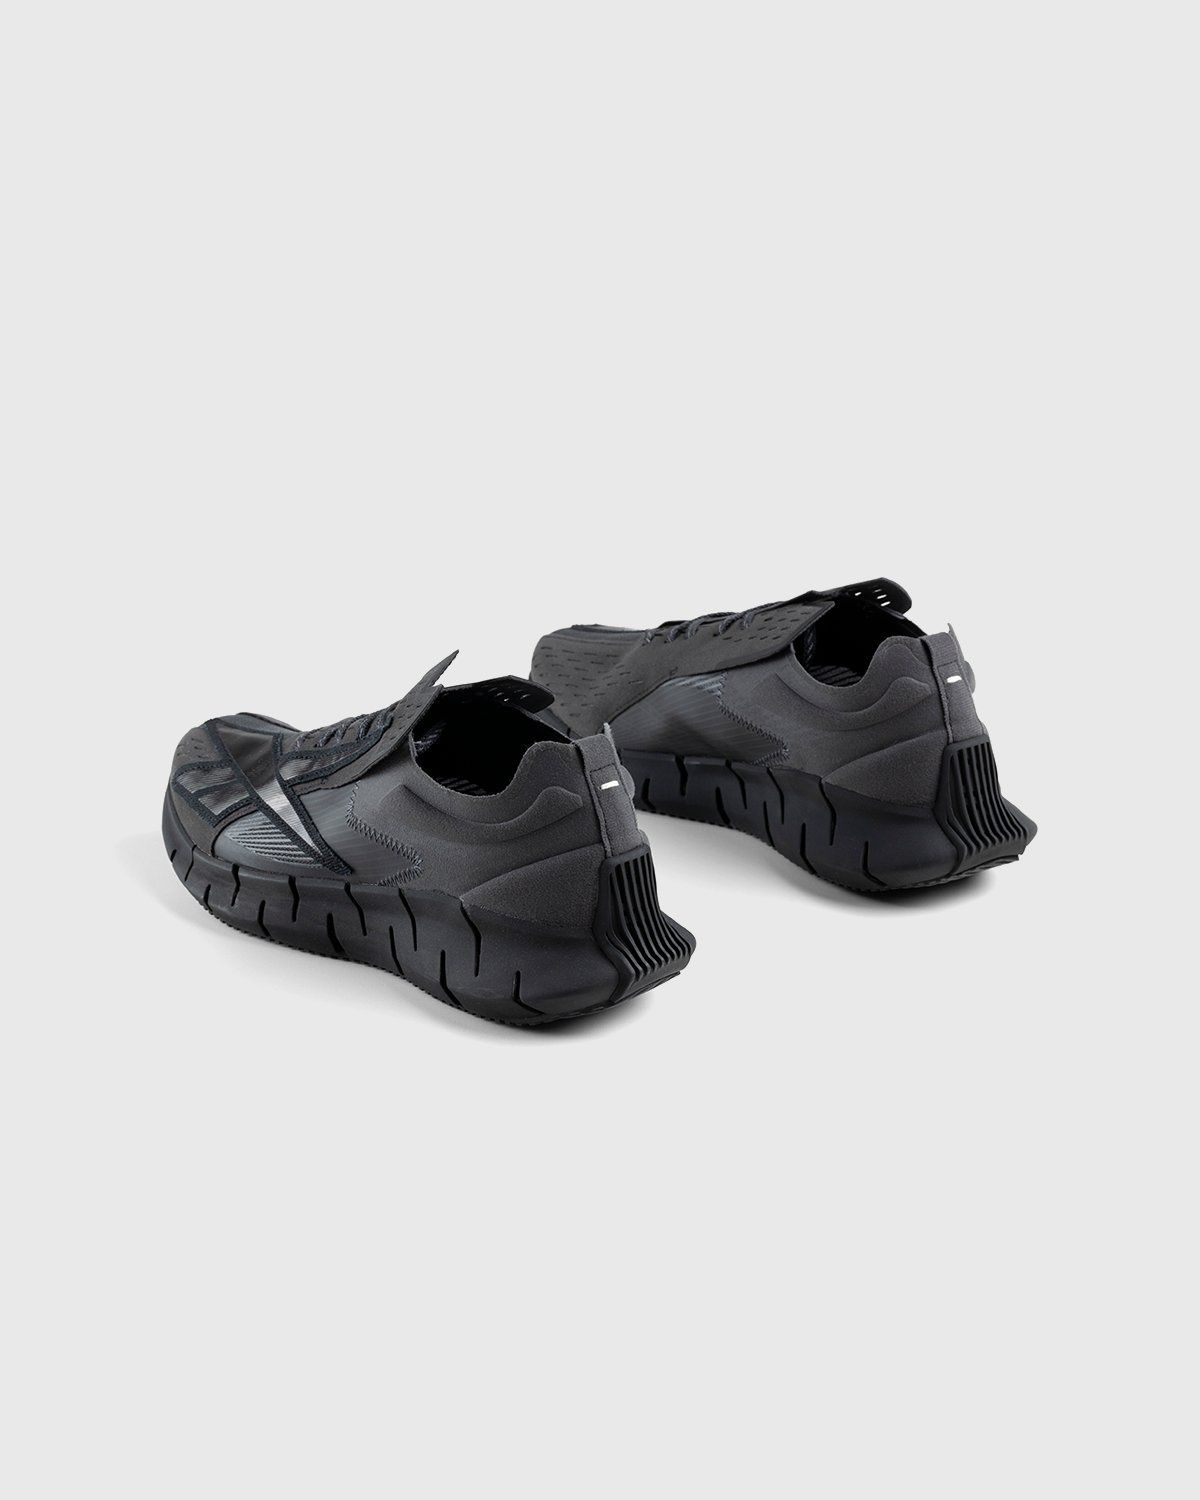 Reebok x Maison Margiela – Zig 3D Storm Memory Of Black - Sneakers - Black - Image 3